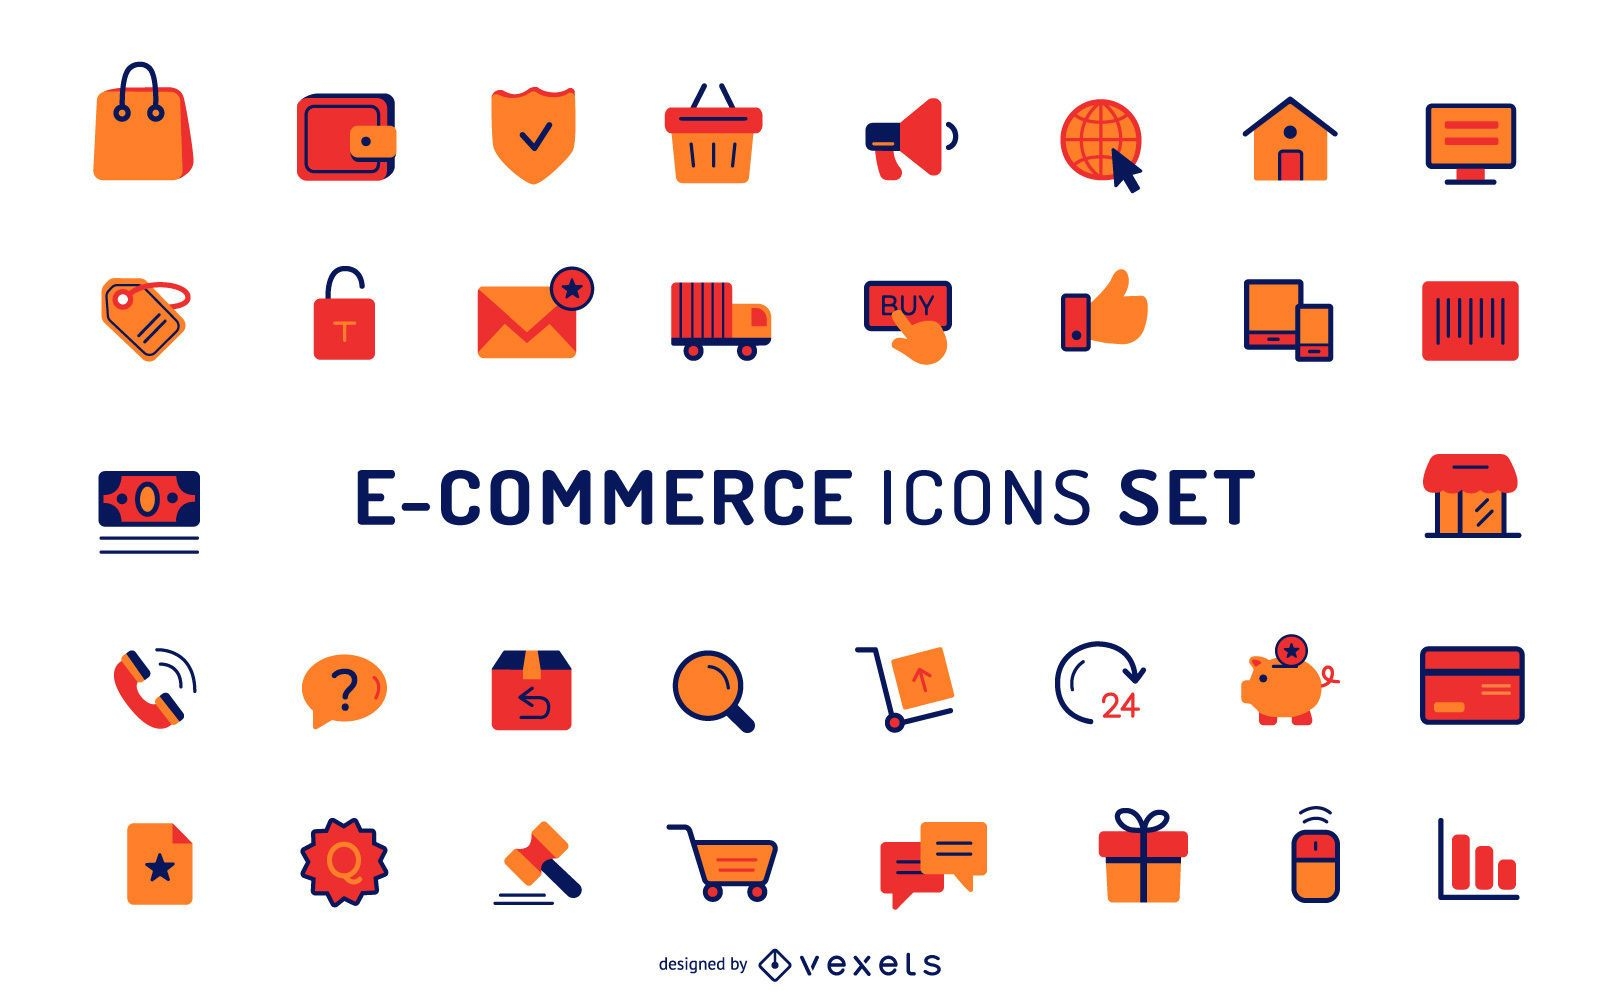 E-Commerce-Symbolsammlung